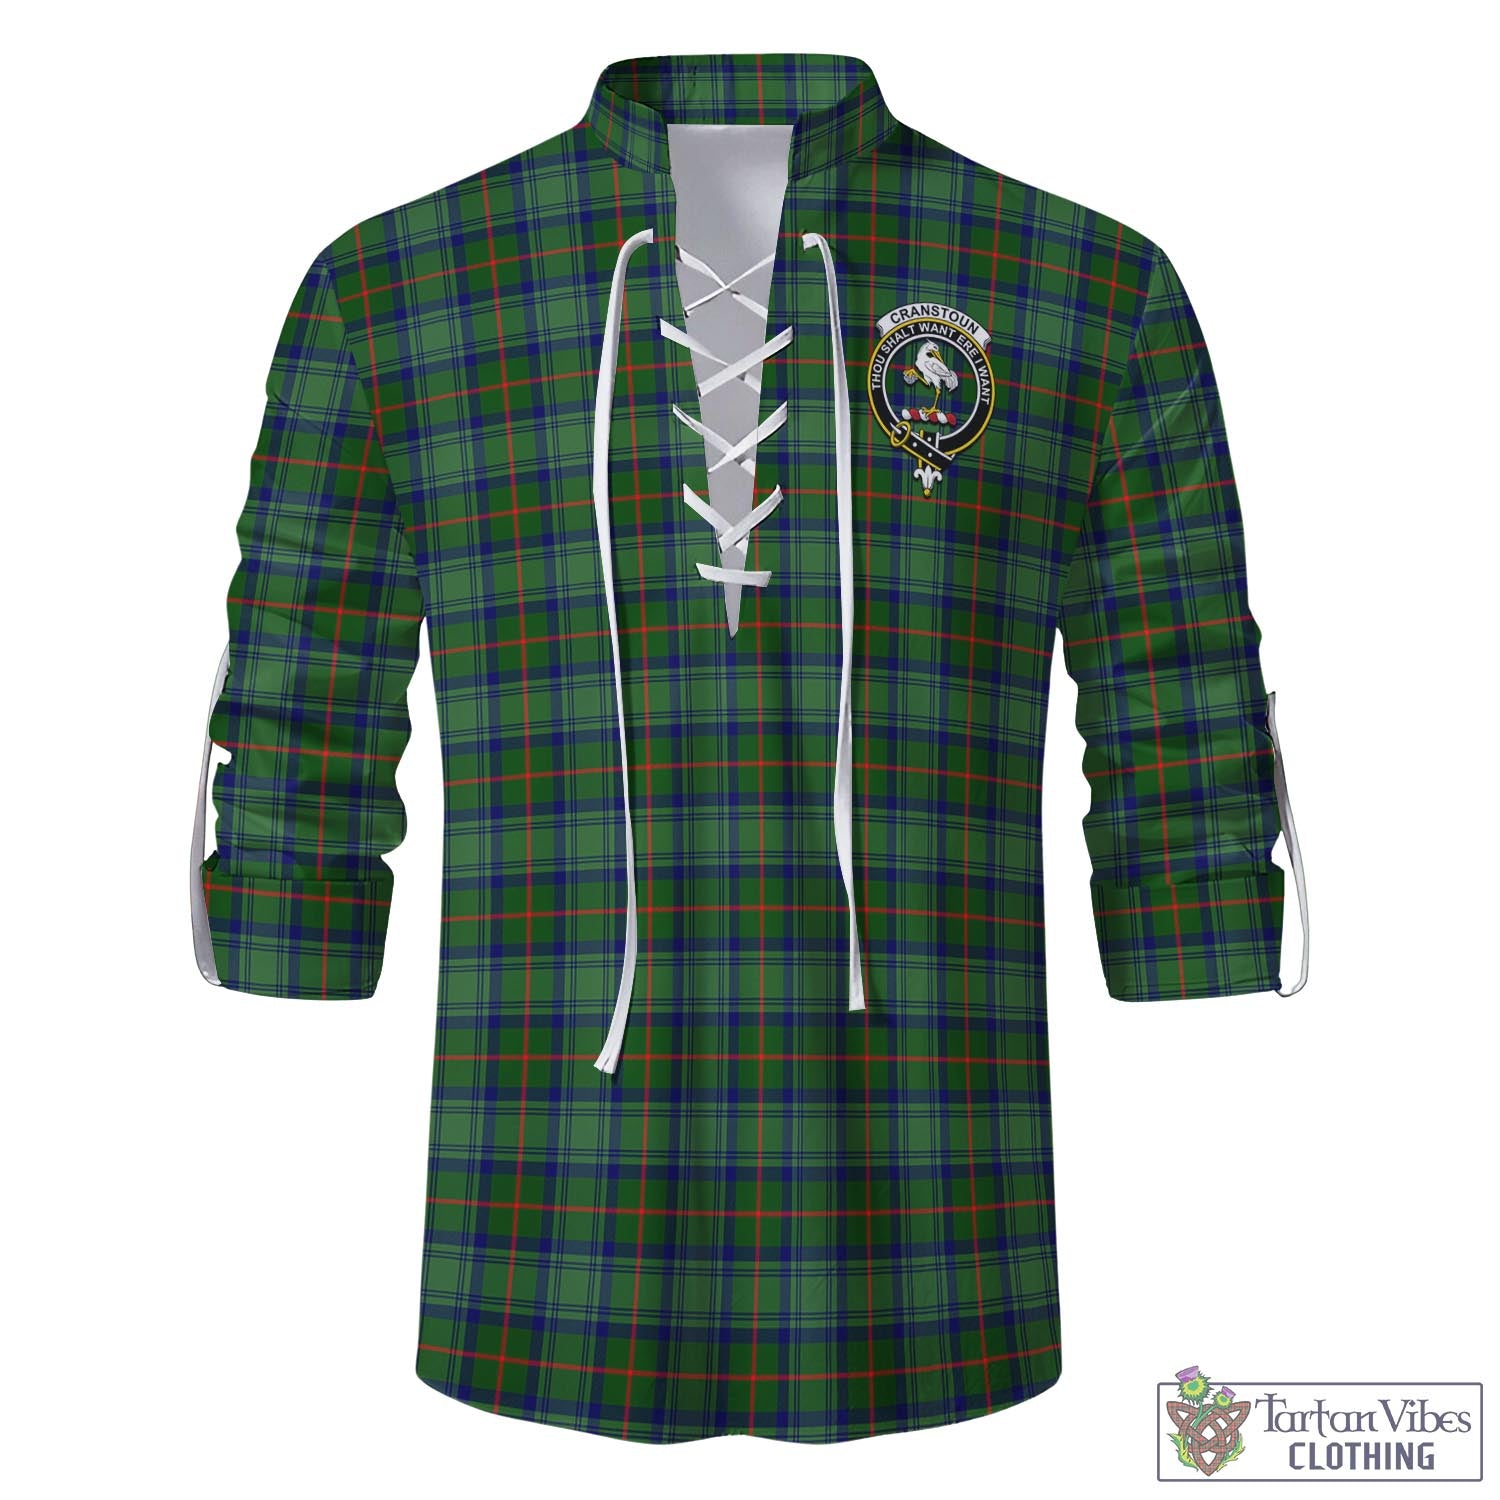 Tartan Vibes Clothing Cranstoun Tartan Men's Scottish Traditional Jacobite Ghillie Kilt Shirt with Family Crest